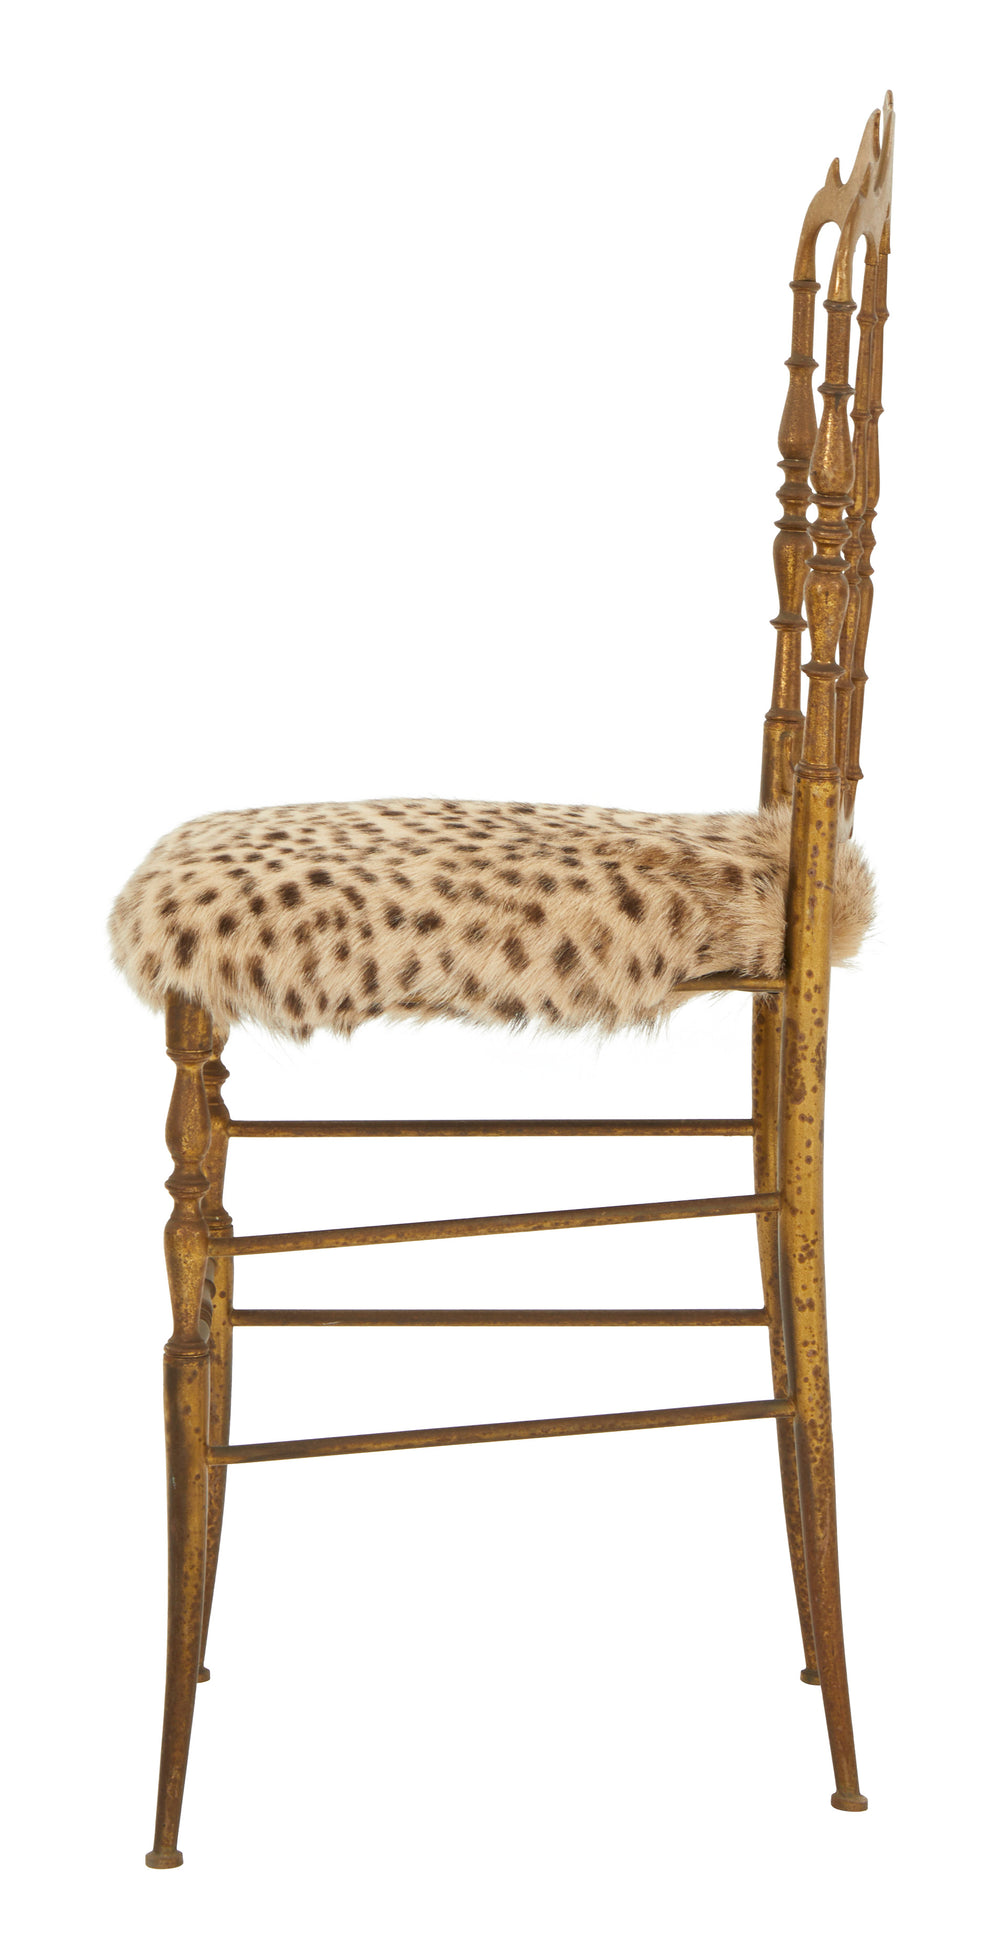 Vintage Brass Chiavari Chair